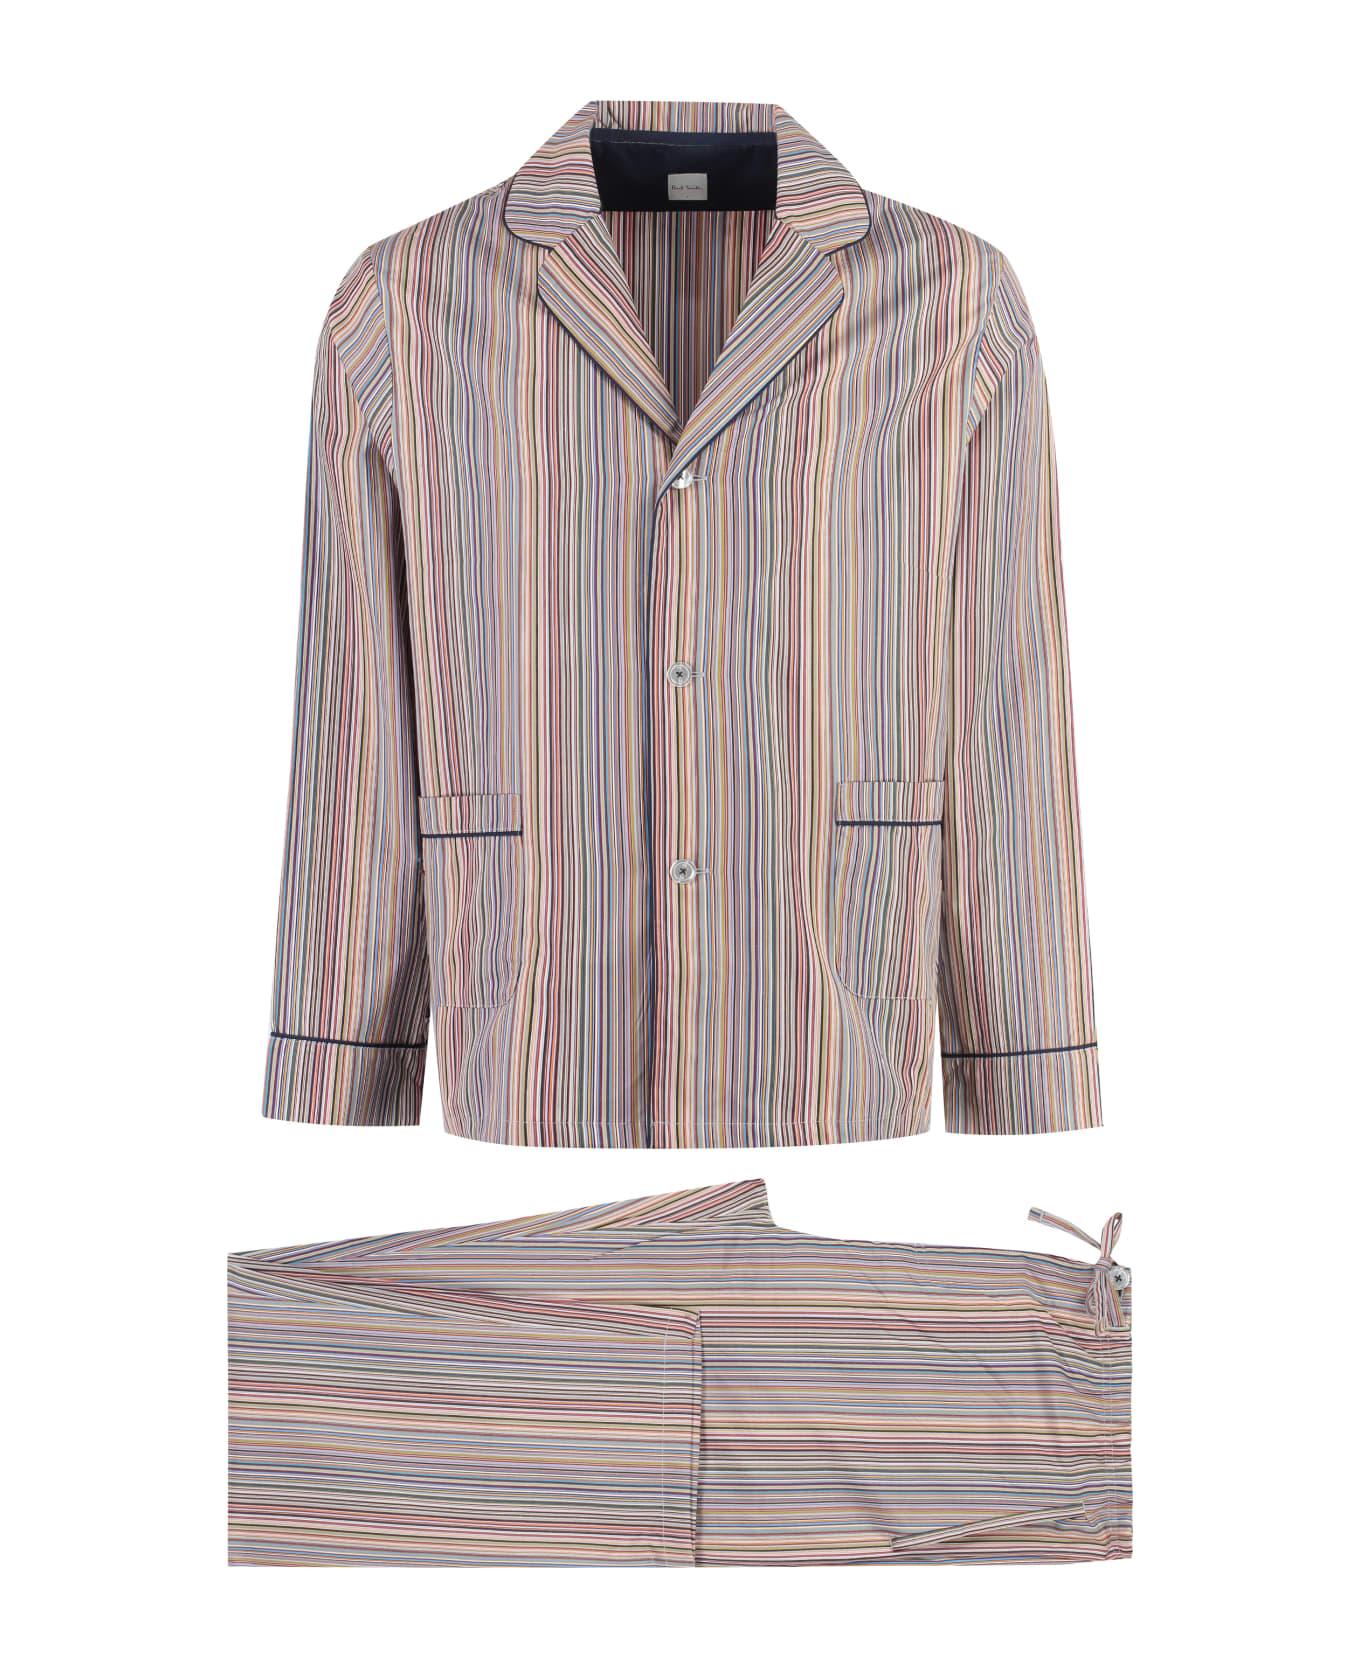 PS by Paul Smith Striped Cotton Pyjamas - Multicolor